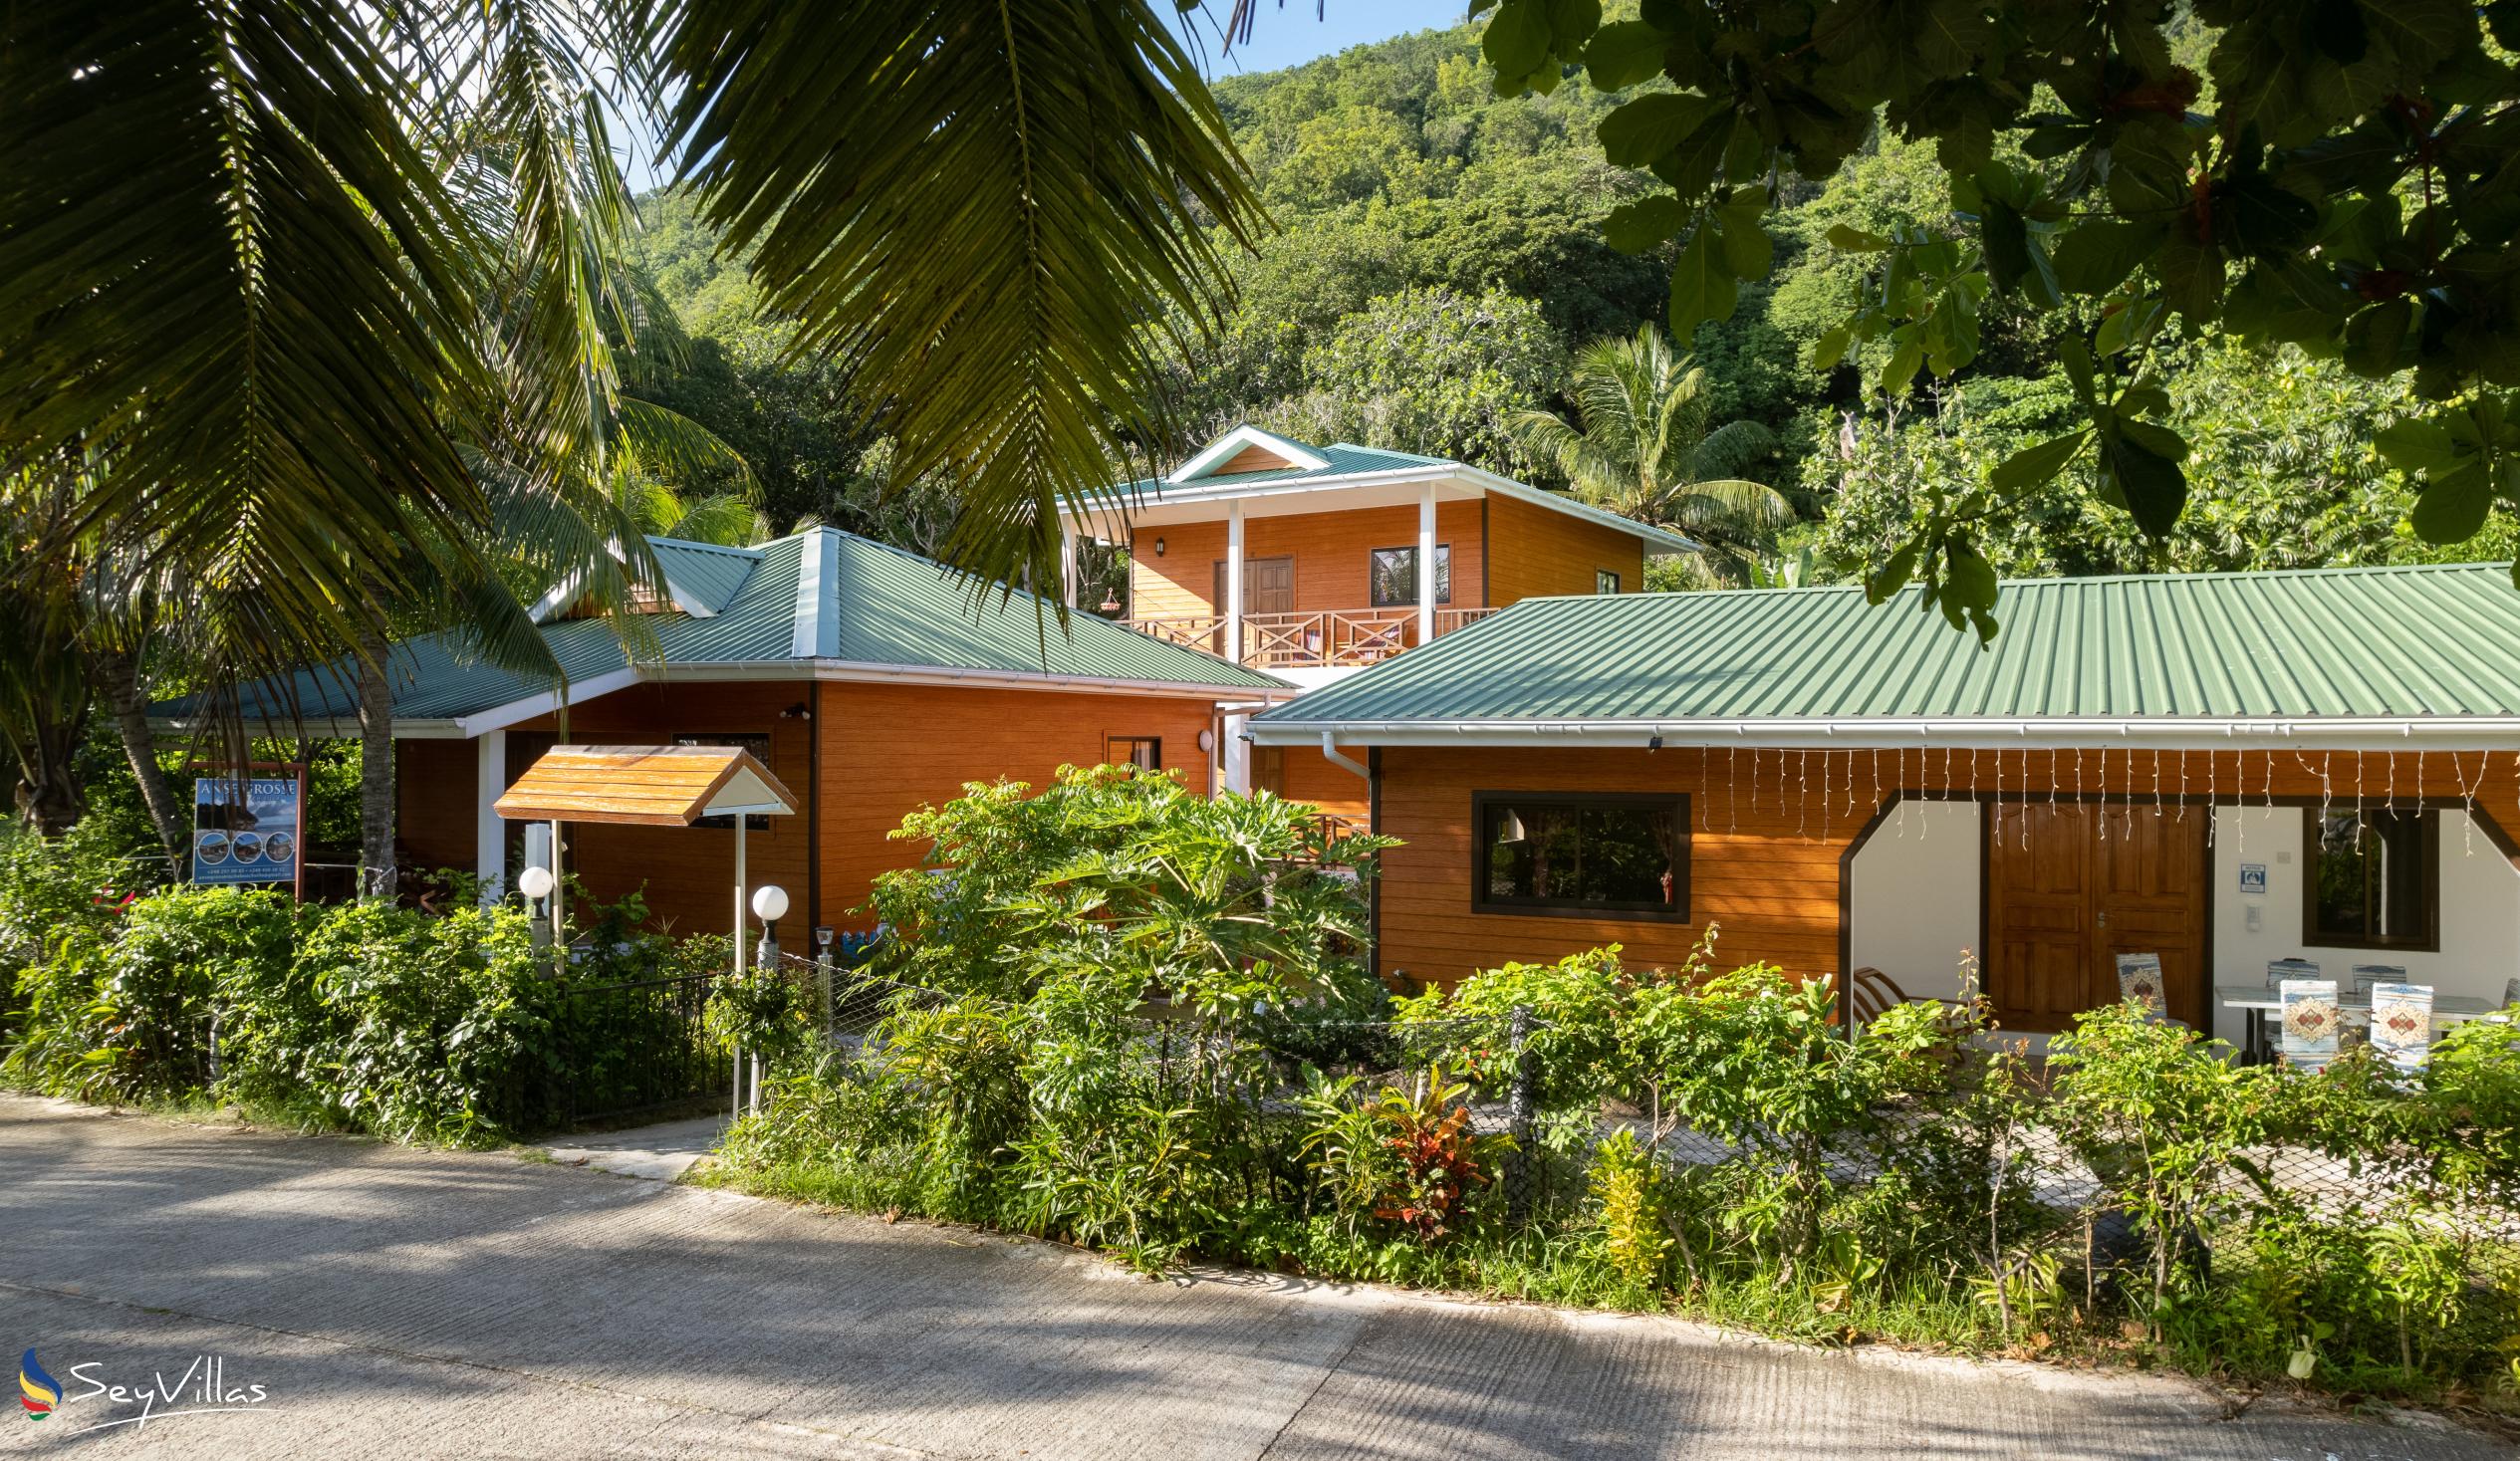 Foto 1: Anse Grosse Roche Beach Villa - Aussenbereich - La Digue (Seychellen)